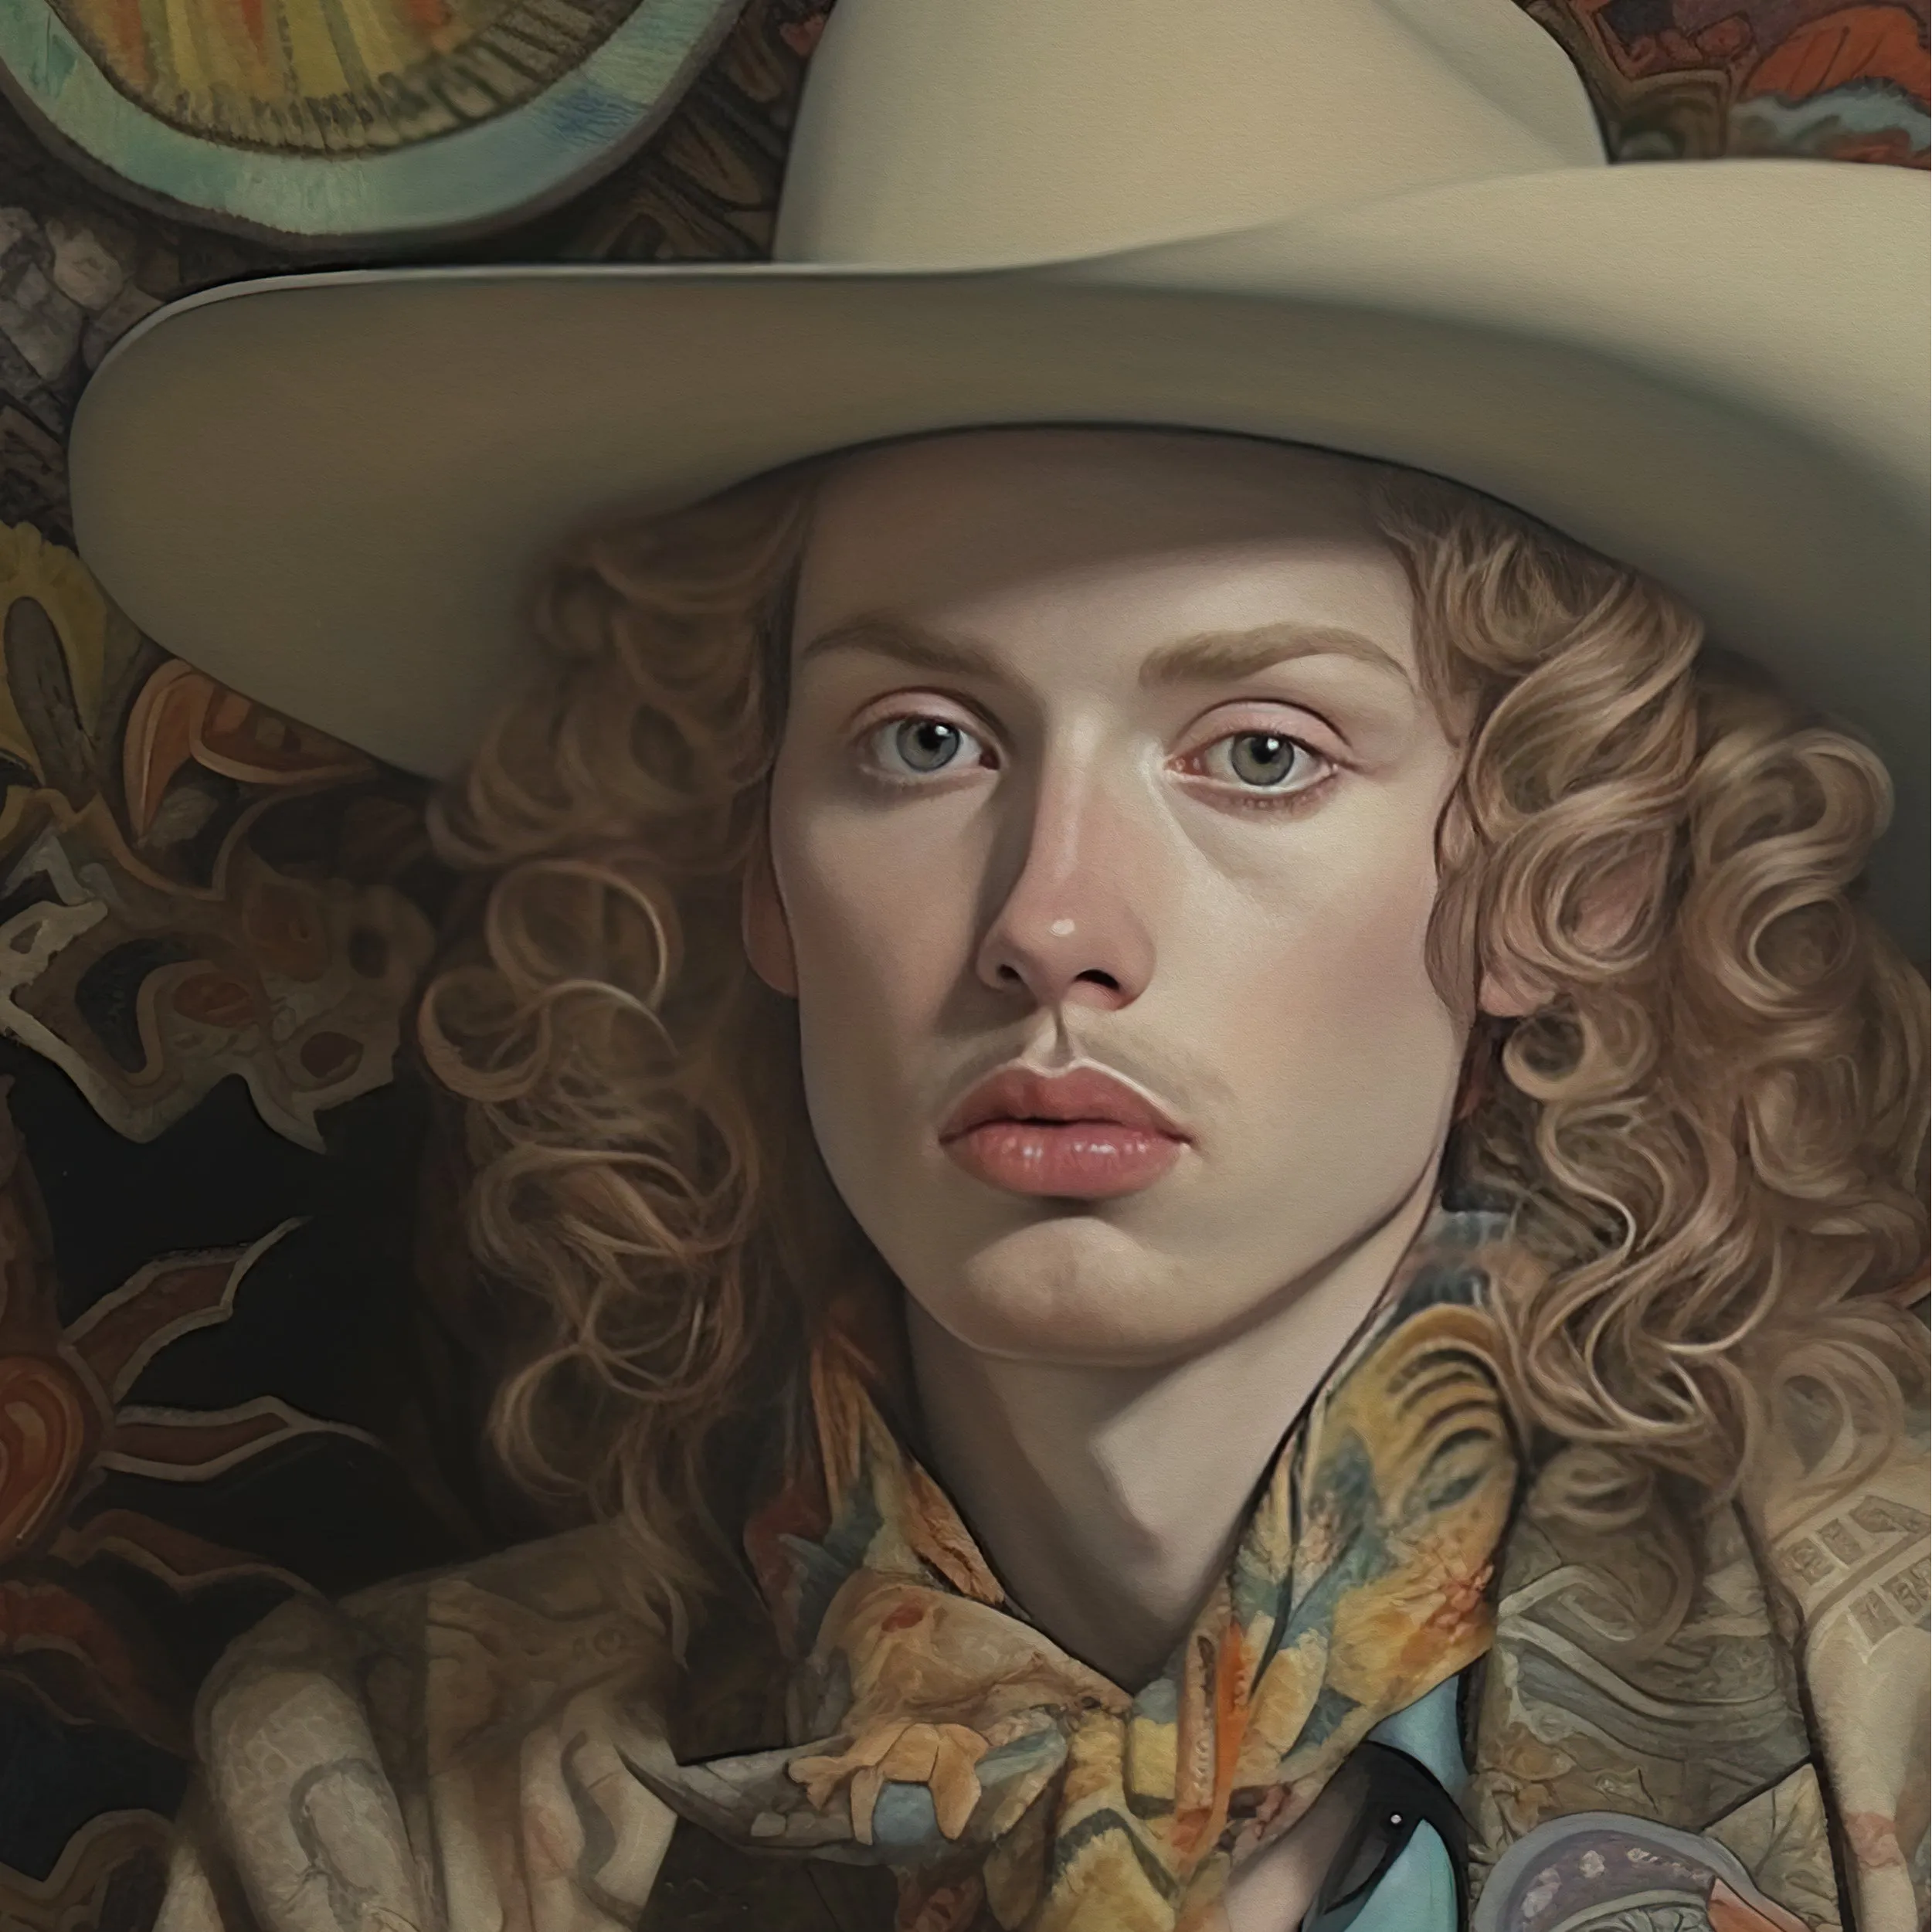 Ollie The Transgender Cowboy - F2m Dandy Transman Art Print - Posters Prints & Visual Artwork - Aesthetic Art